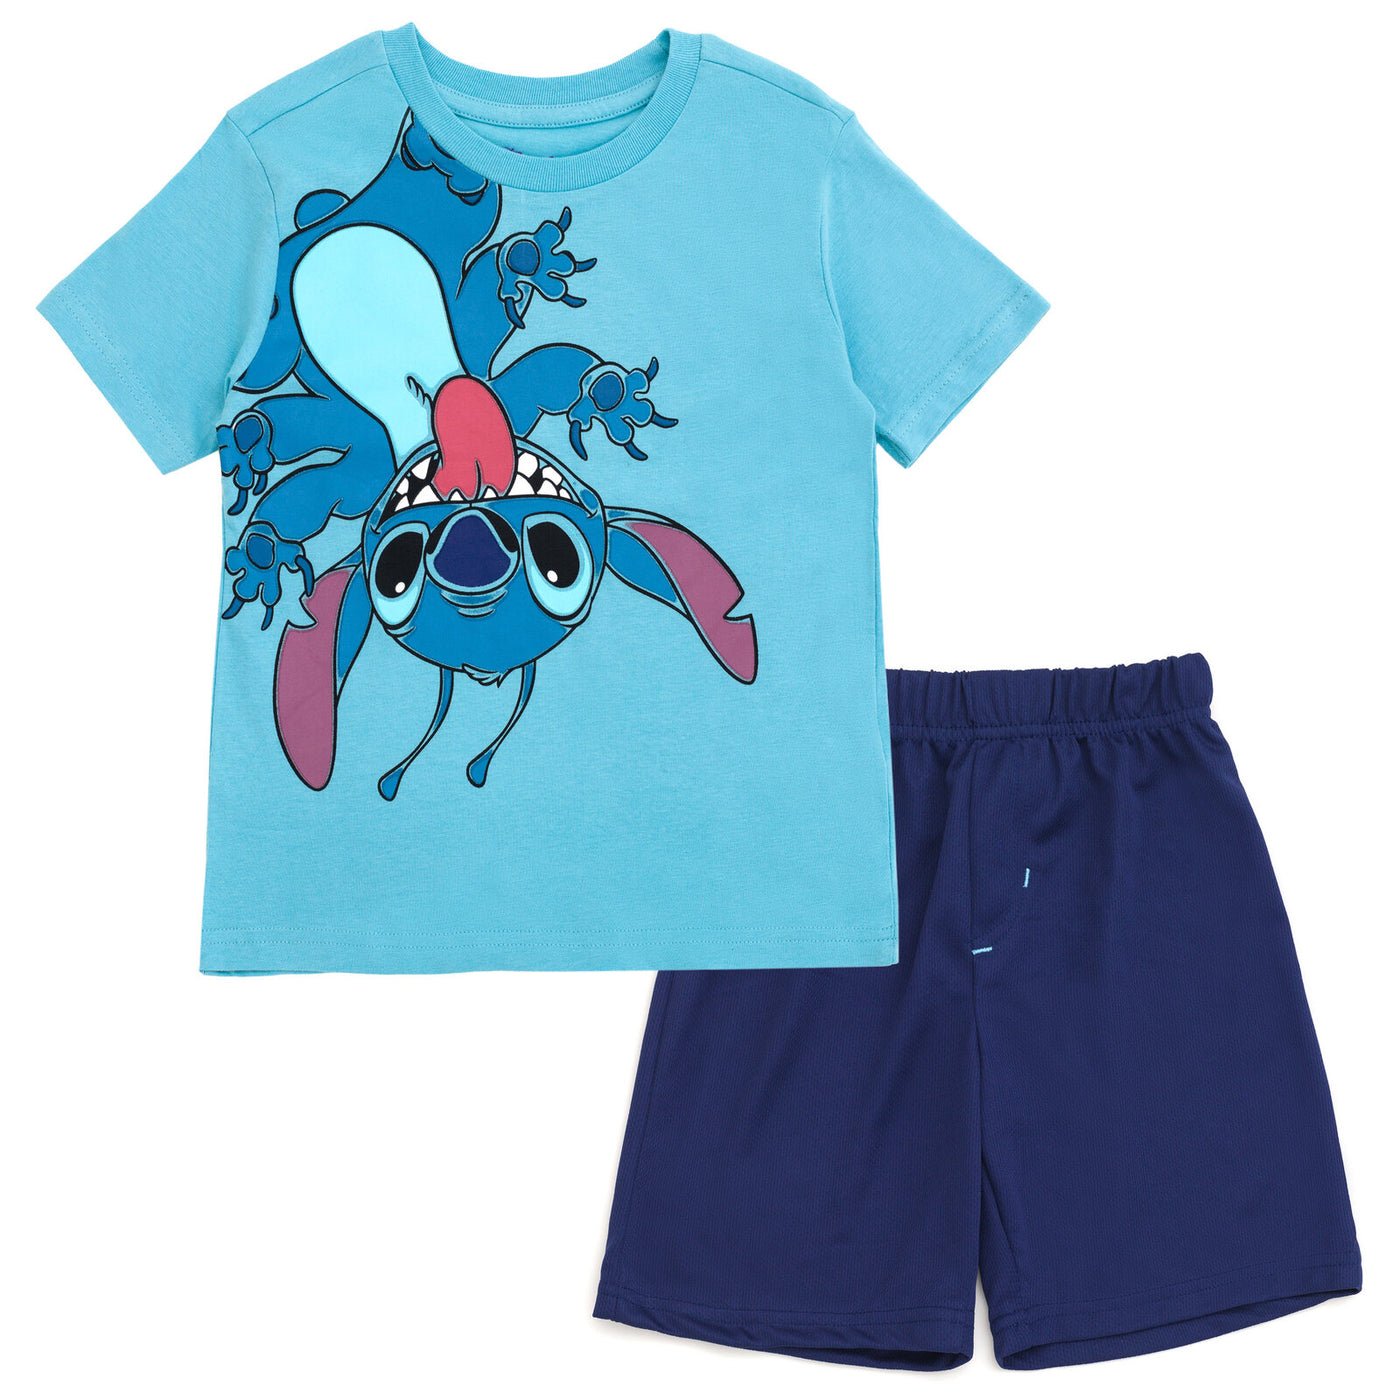 Lilo & Stitch T-Shirt and Mesh Shorts Outfit Set